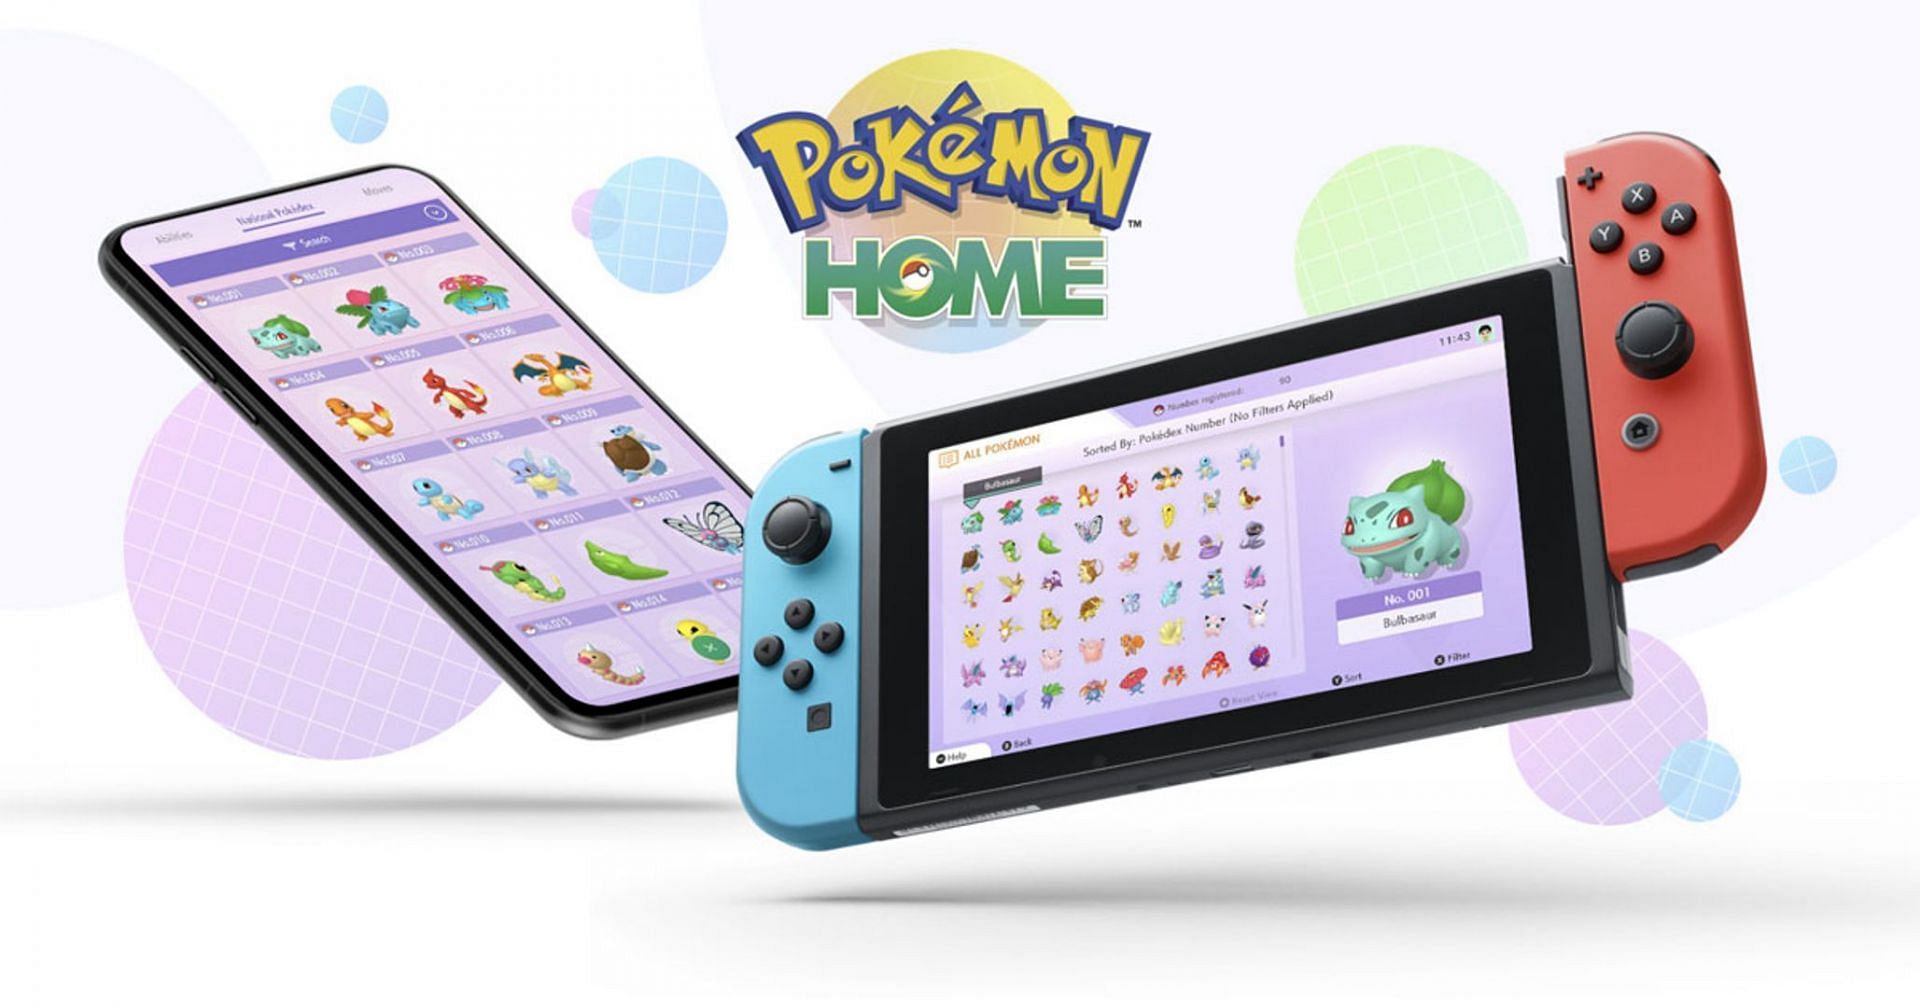 Promotional imagery for Pokemon Home (Image via The Pokemon Company)